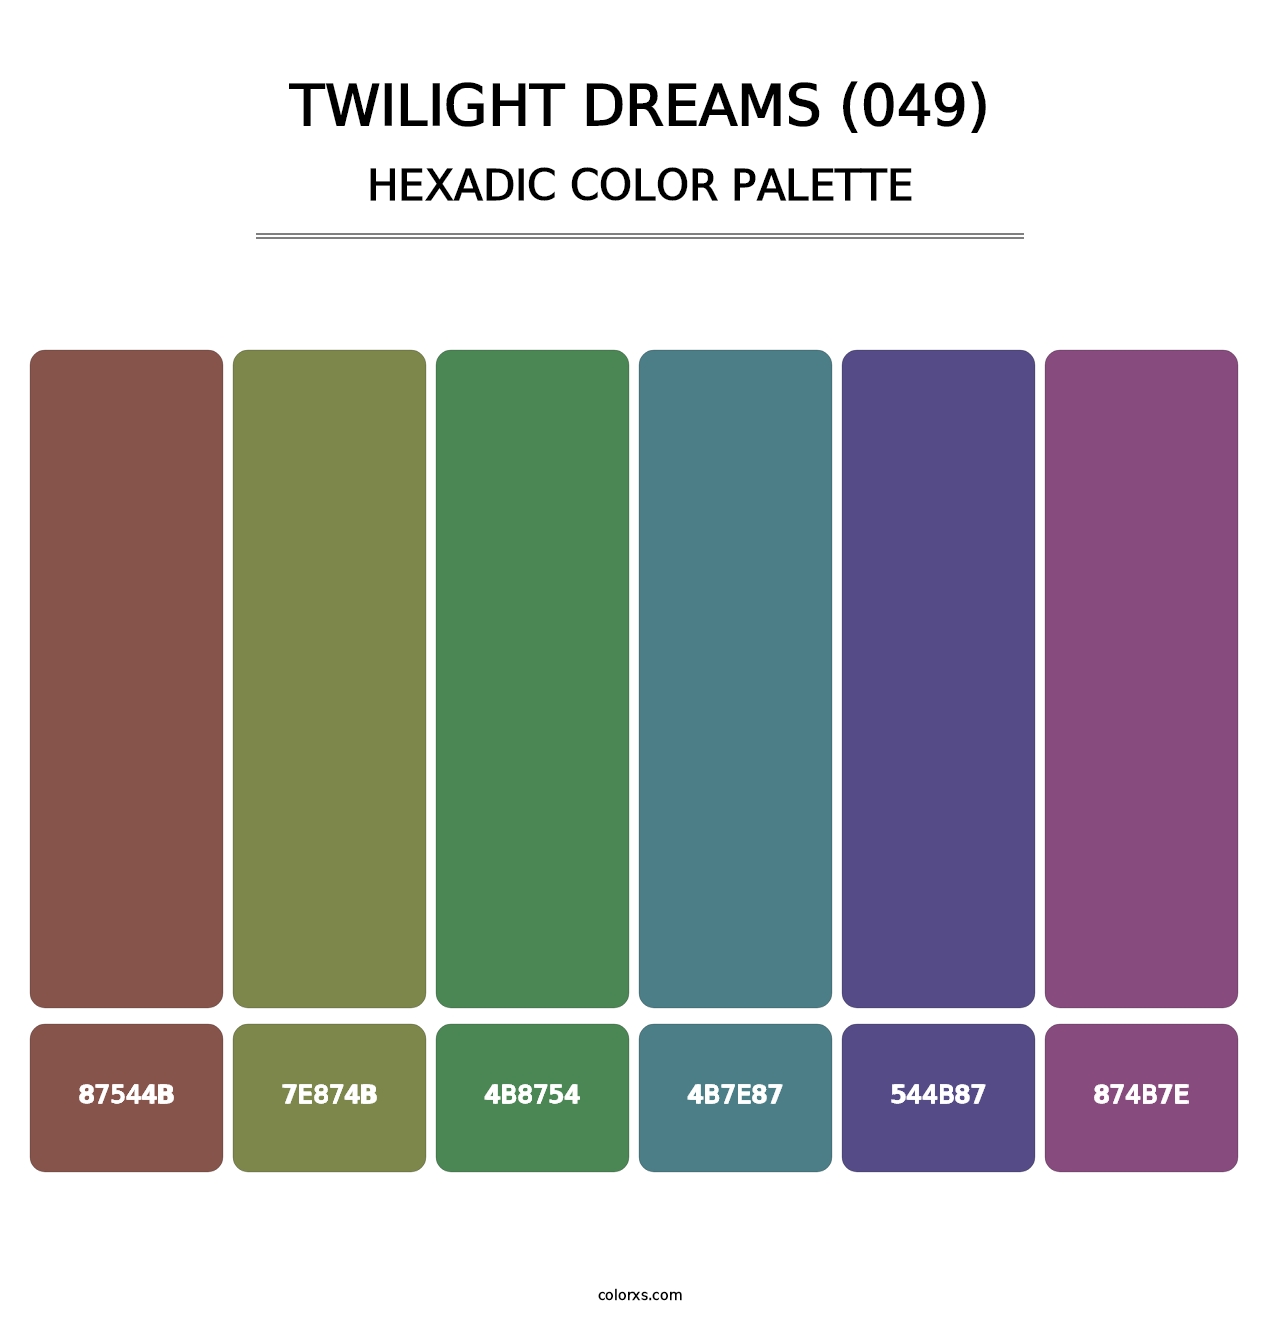 Twilight Dreams (049) - Hexadic Color Palette